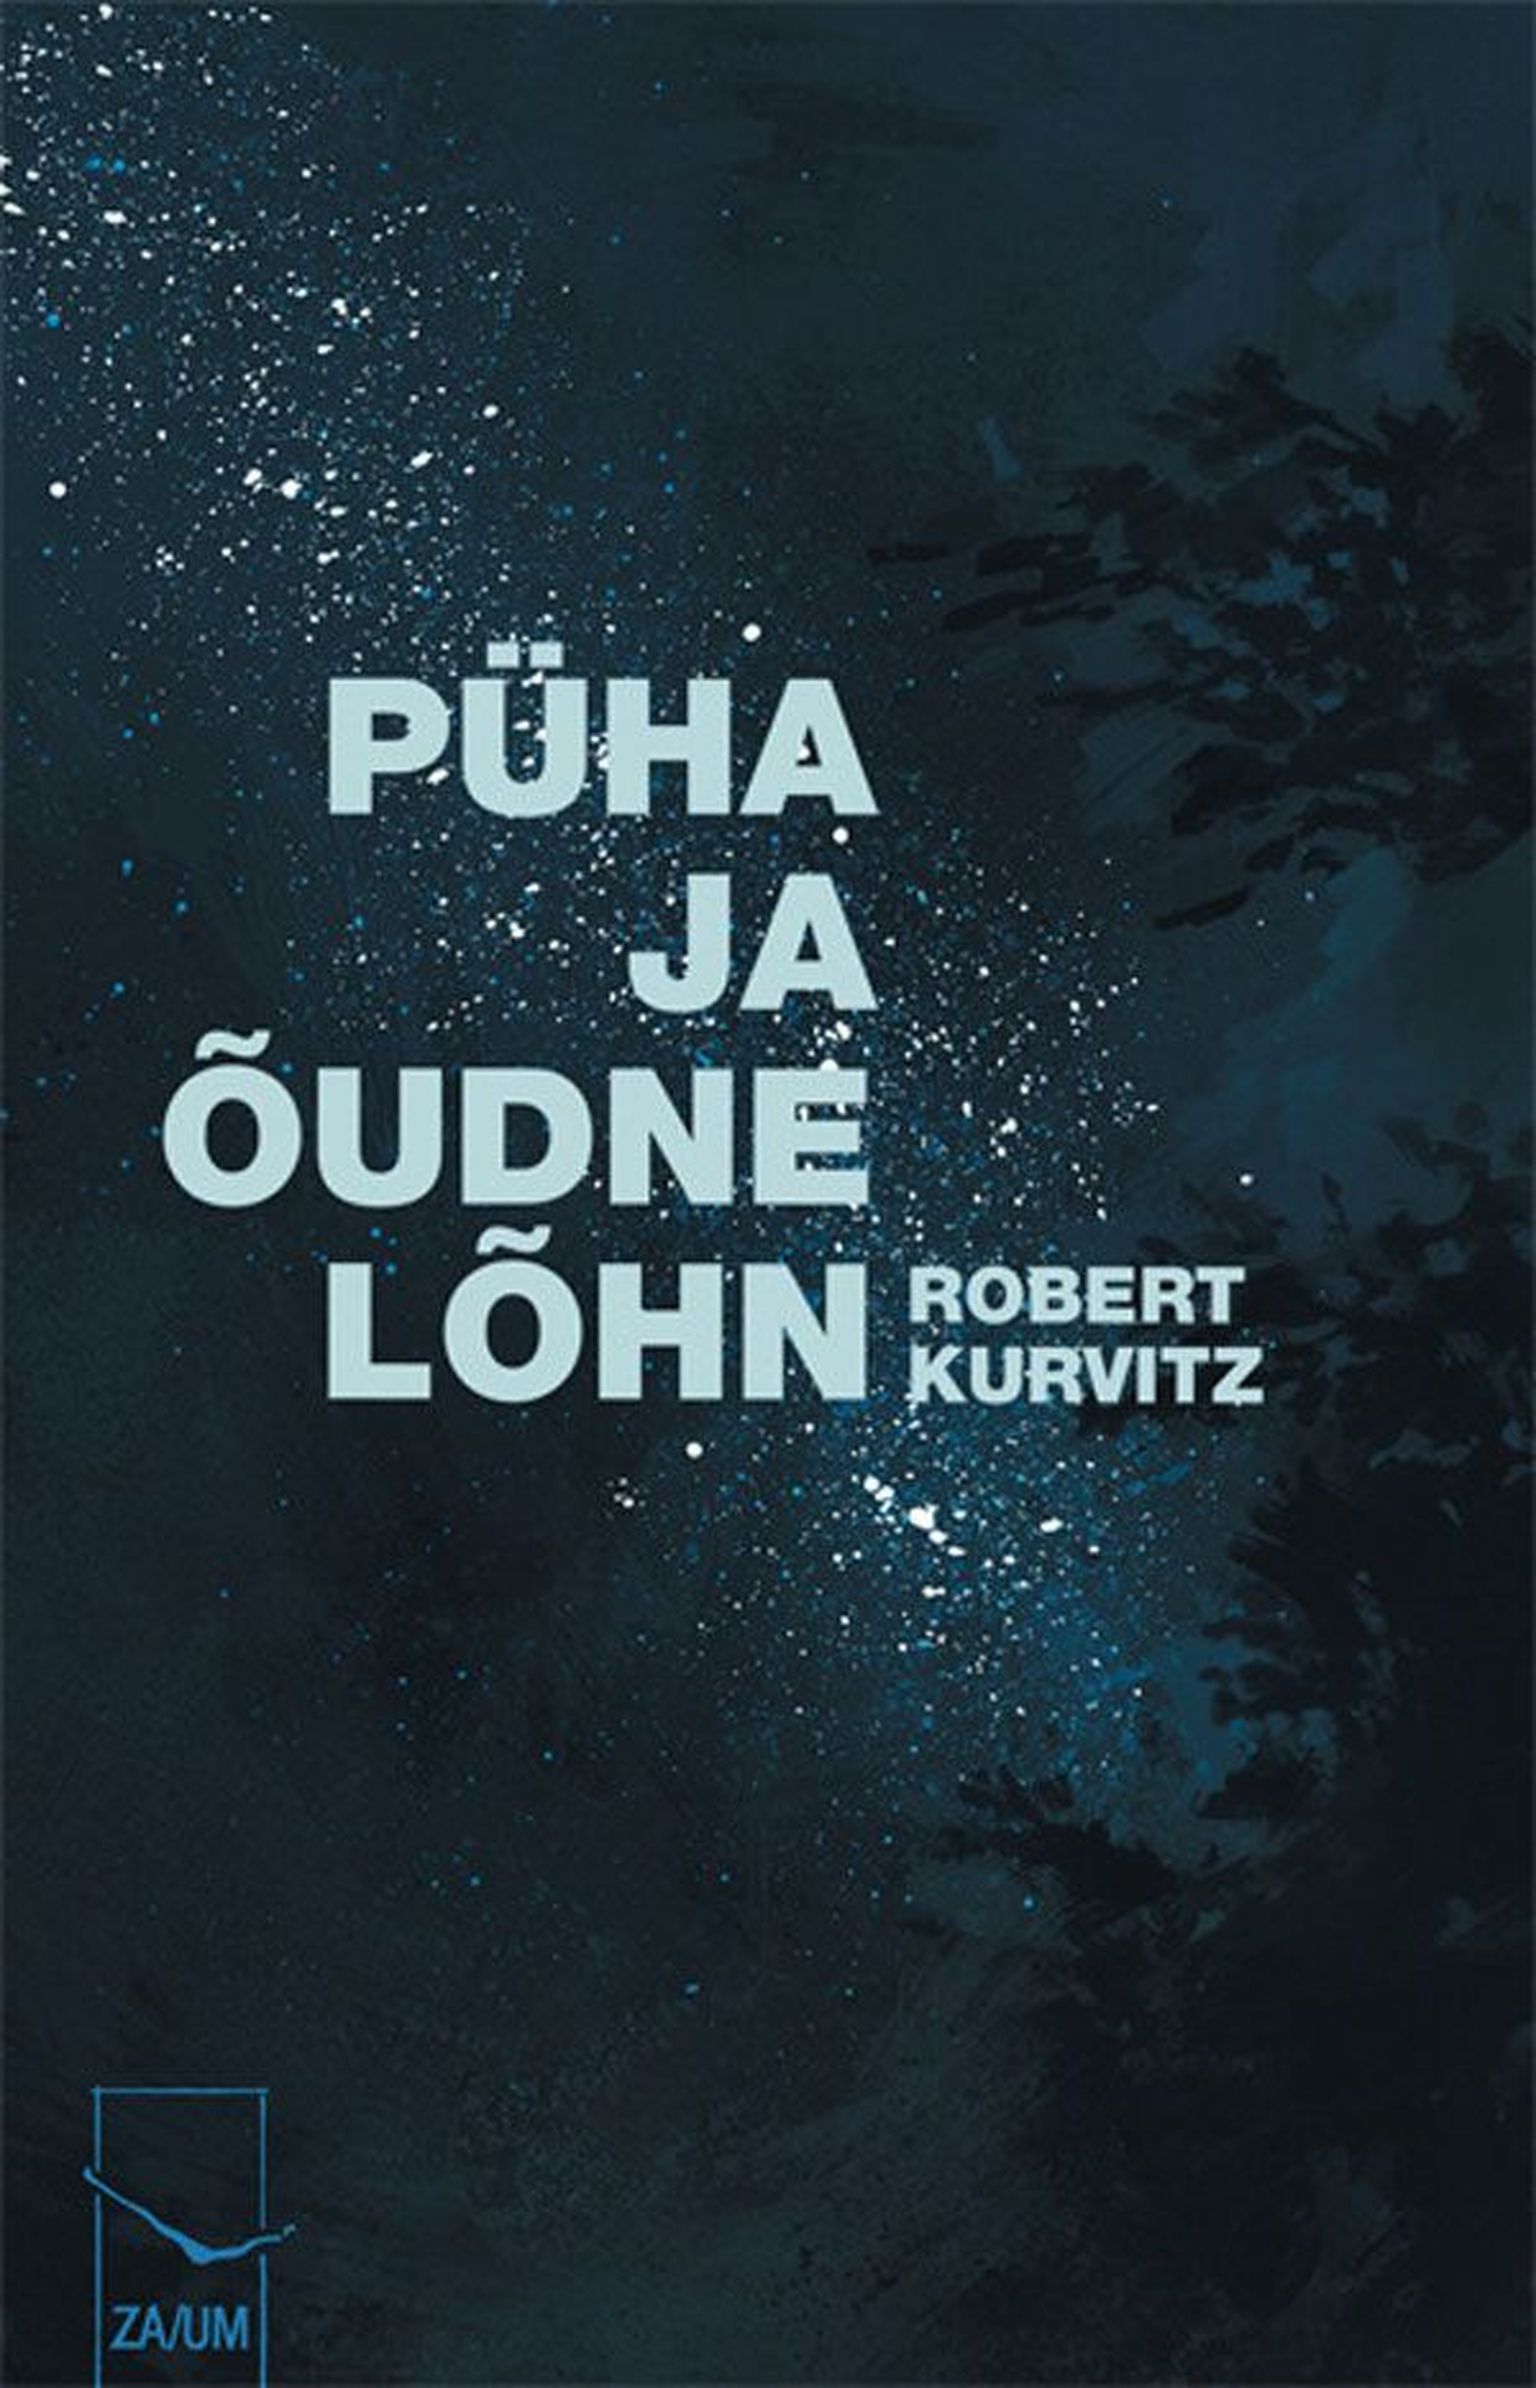 Raamat
Robert Kurvitz 
«Püha ja õudne lõhn» 
ZA/UM, 2013 
232 lk